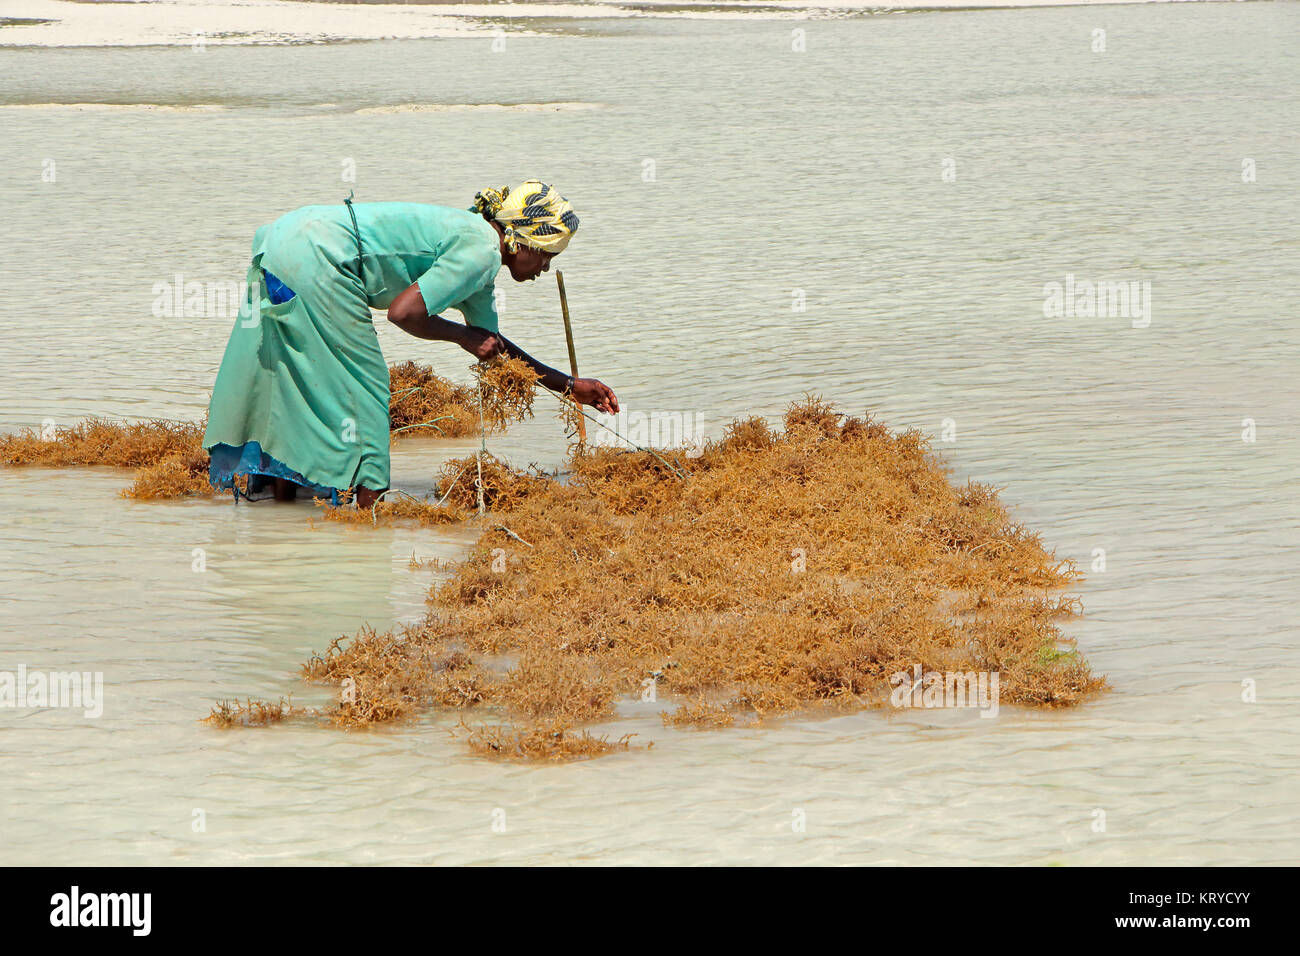 ZANZIBAR, TANZANIA - OCTOBER 25, 2014: Unidentified woman harvesting cultivated seaweed in the shallow, clear coastal waters of Zanzibar island Stock Photo